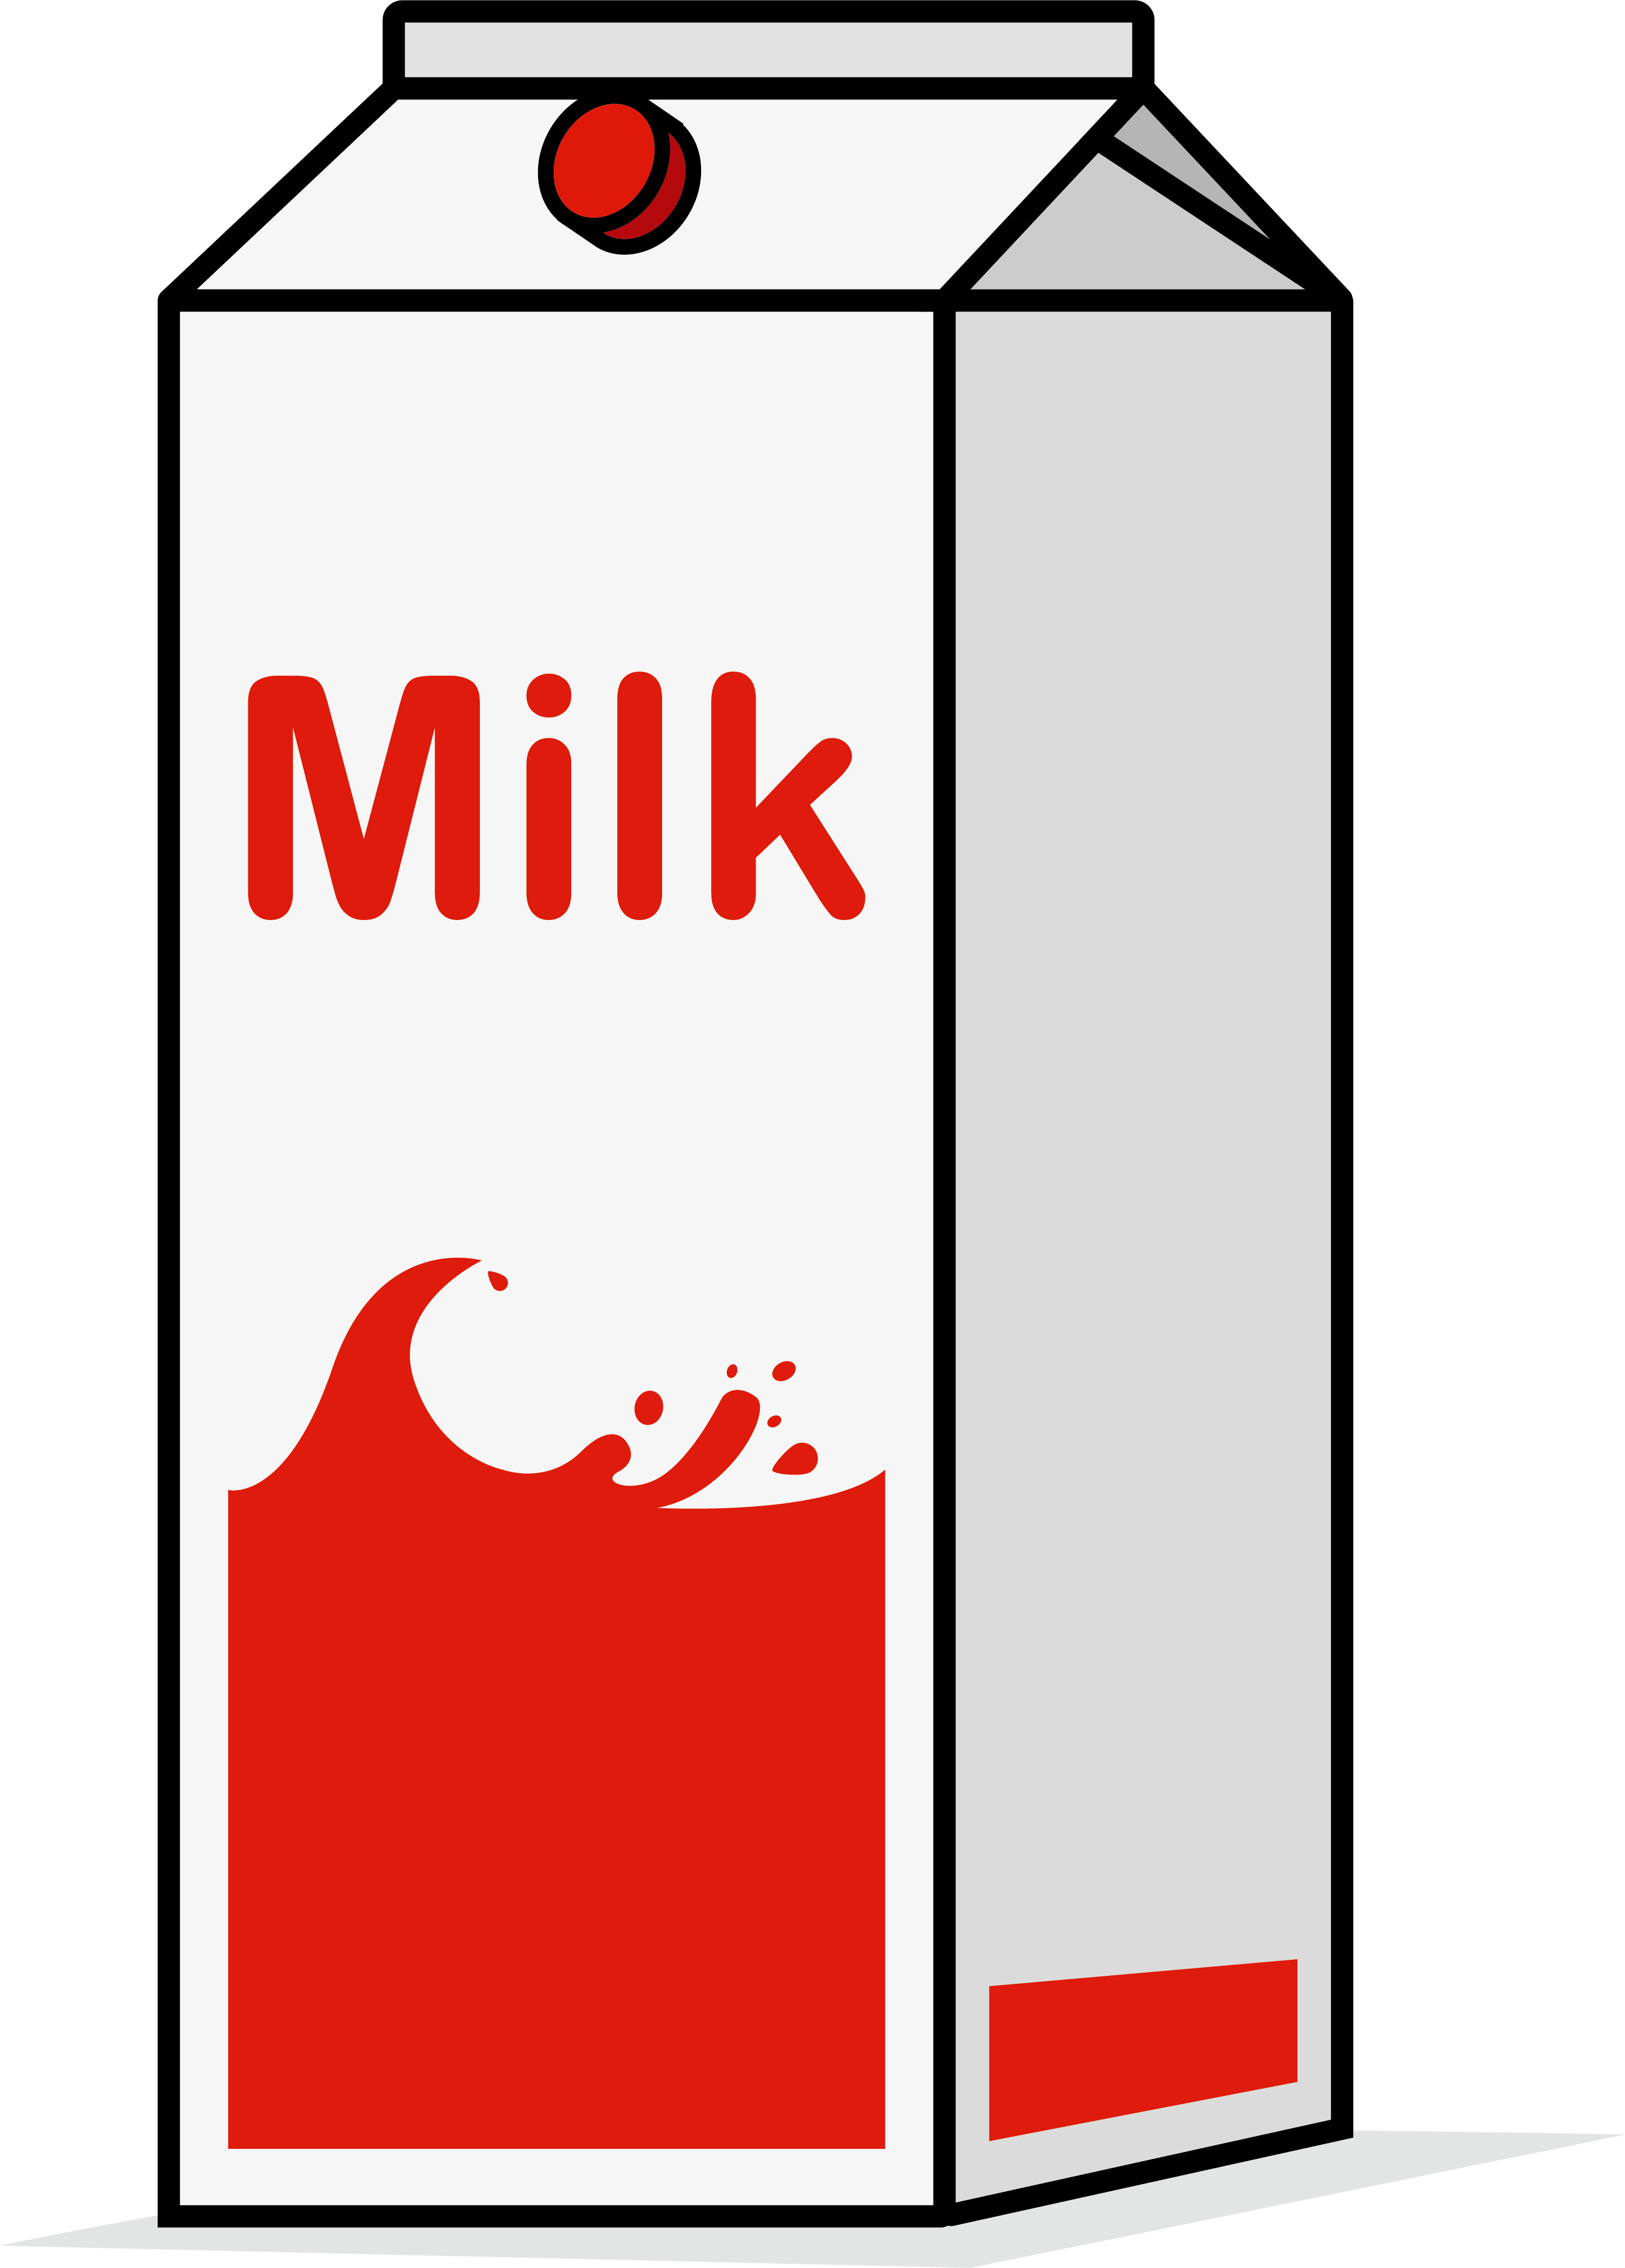 Carton of milk